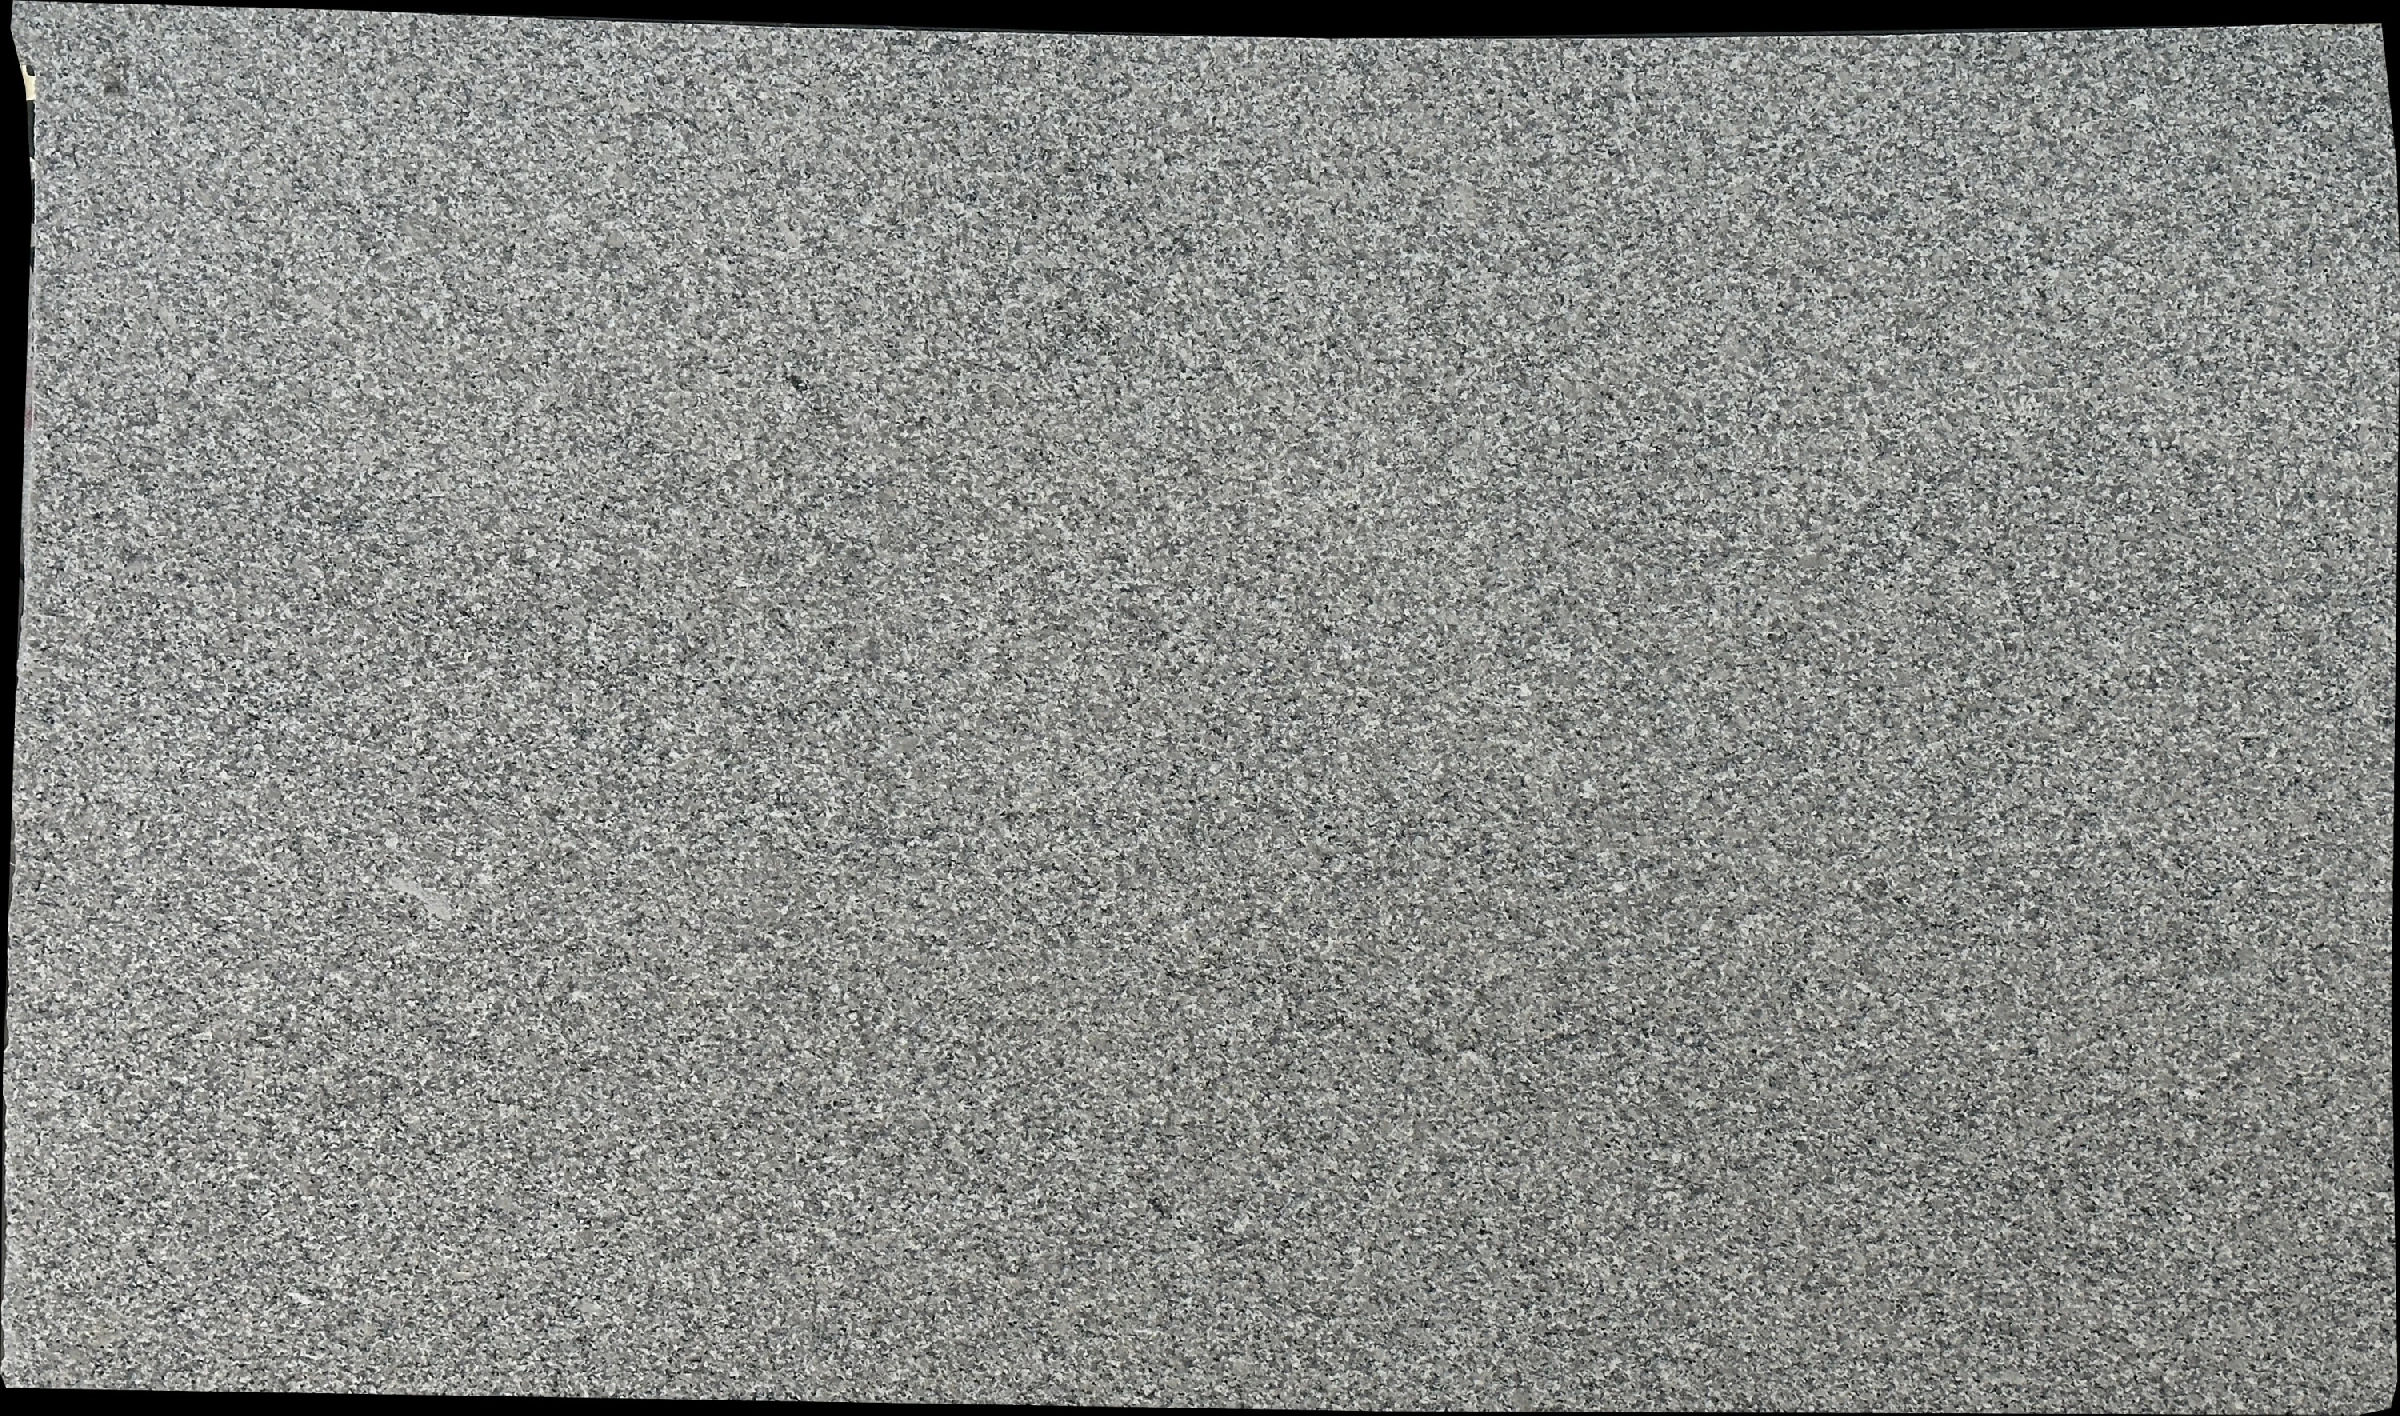 Bianco Sardo Perla Granite Slabs Supplier - E04875